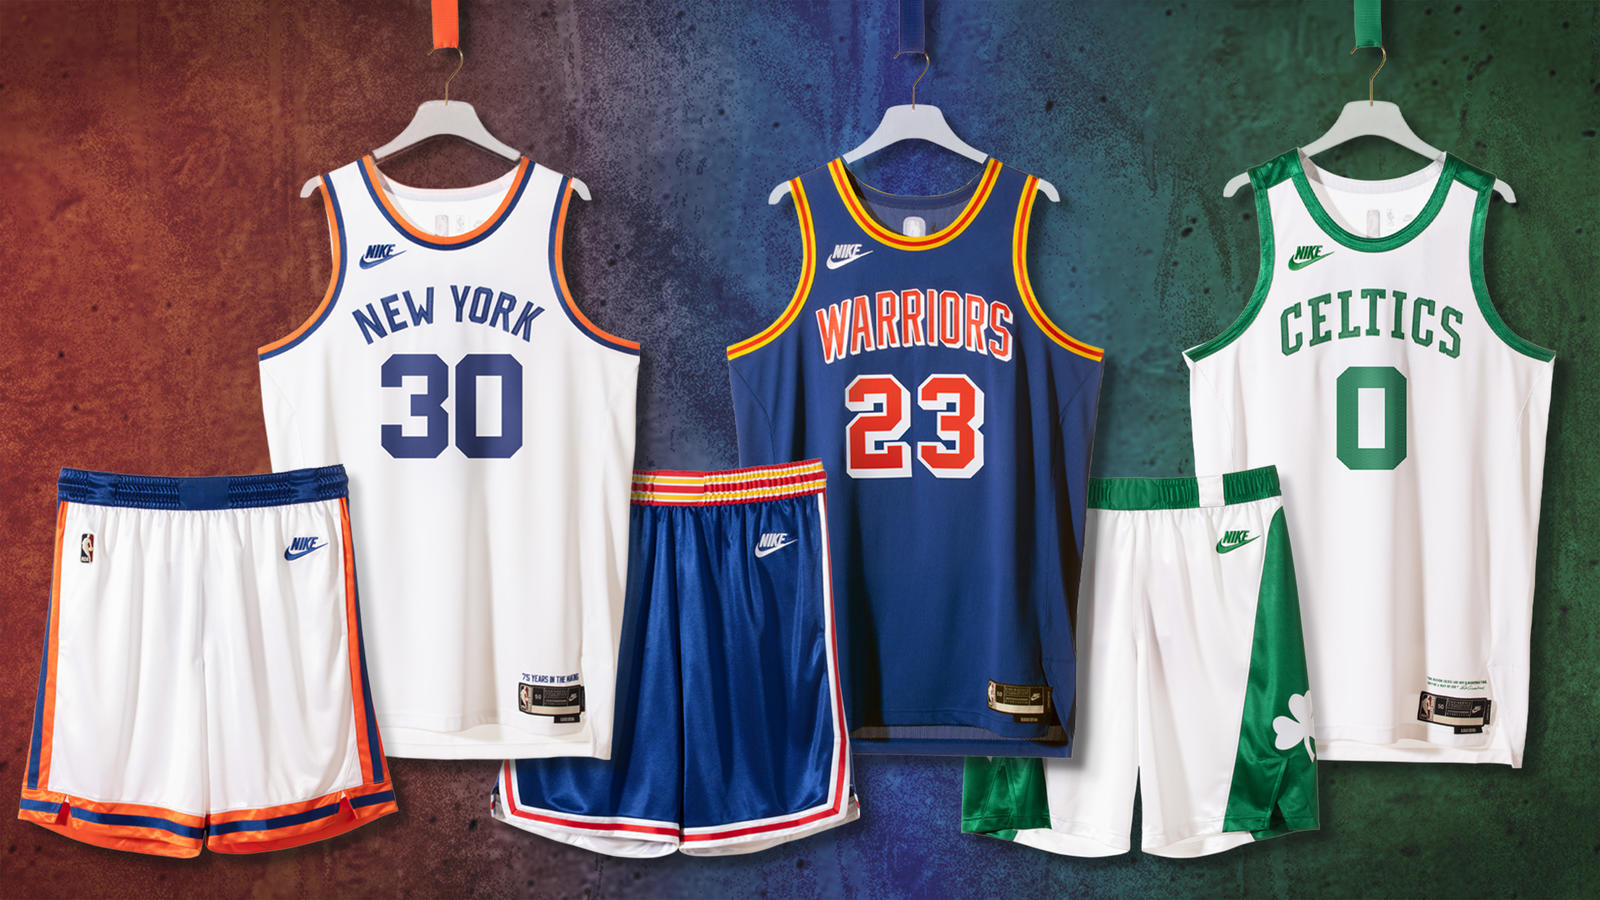 Nike Classic Edition Uniforms for NBA 75th Anniversary